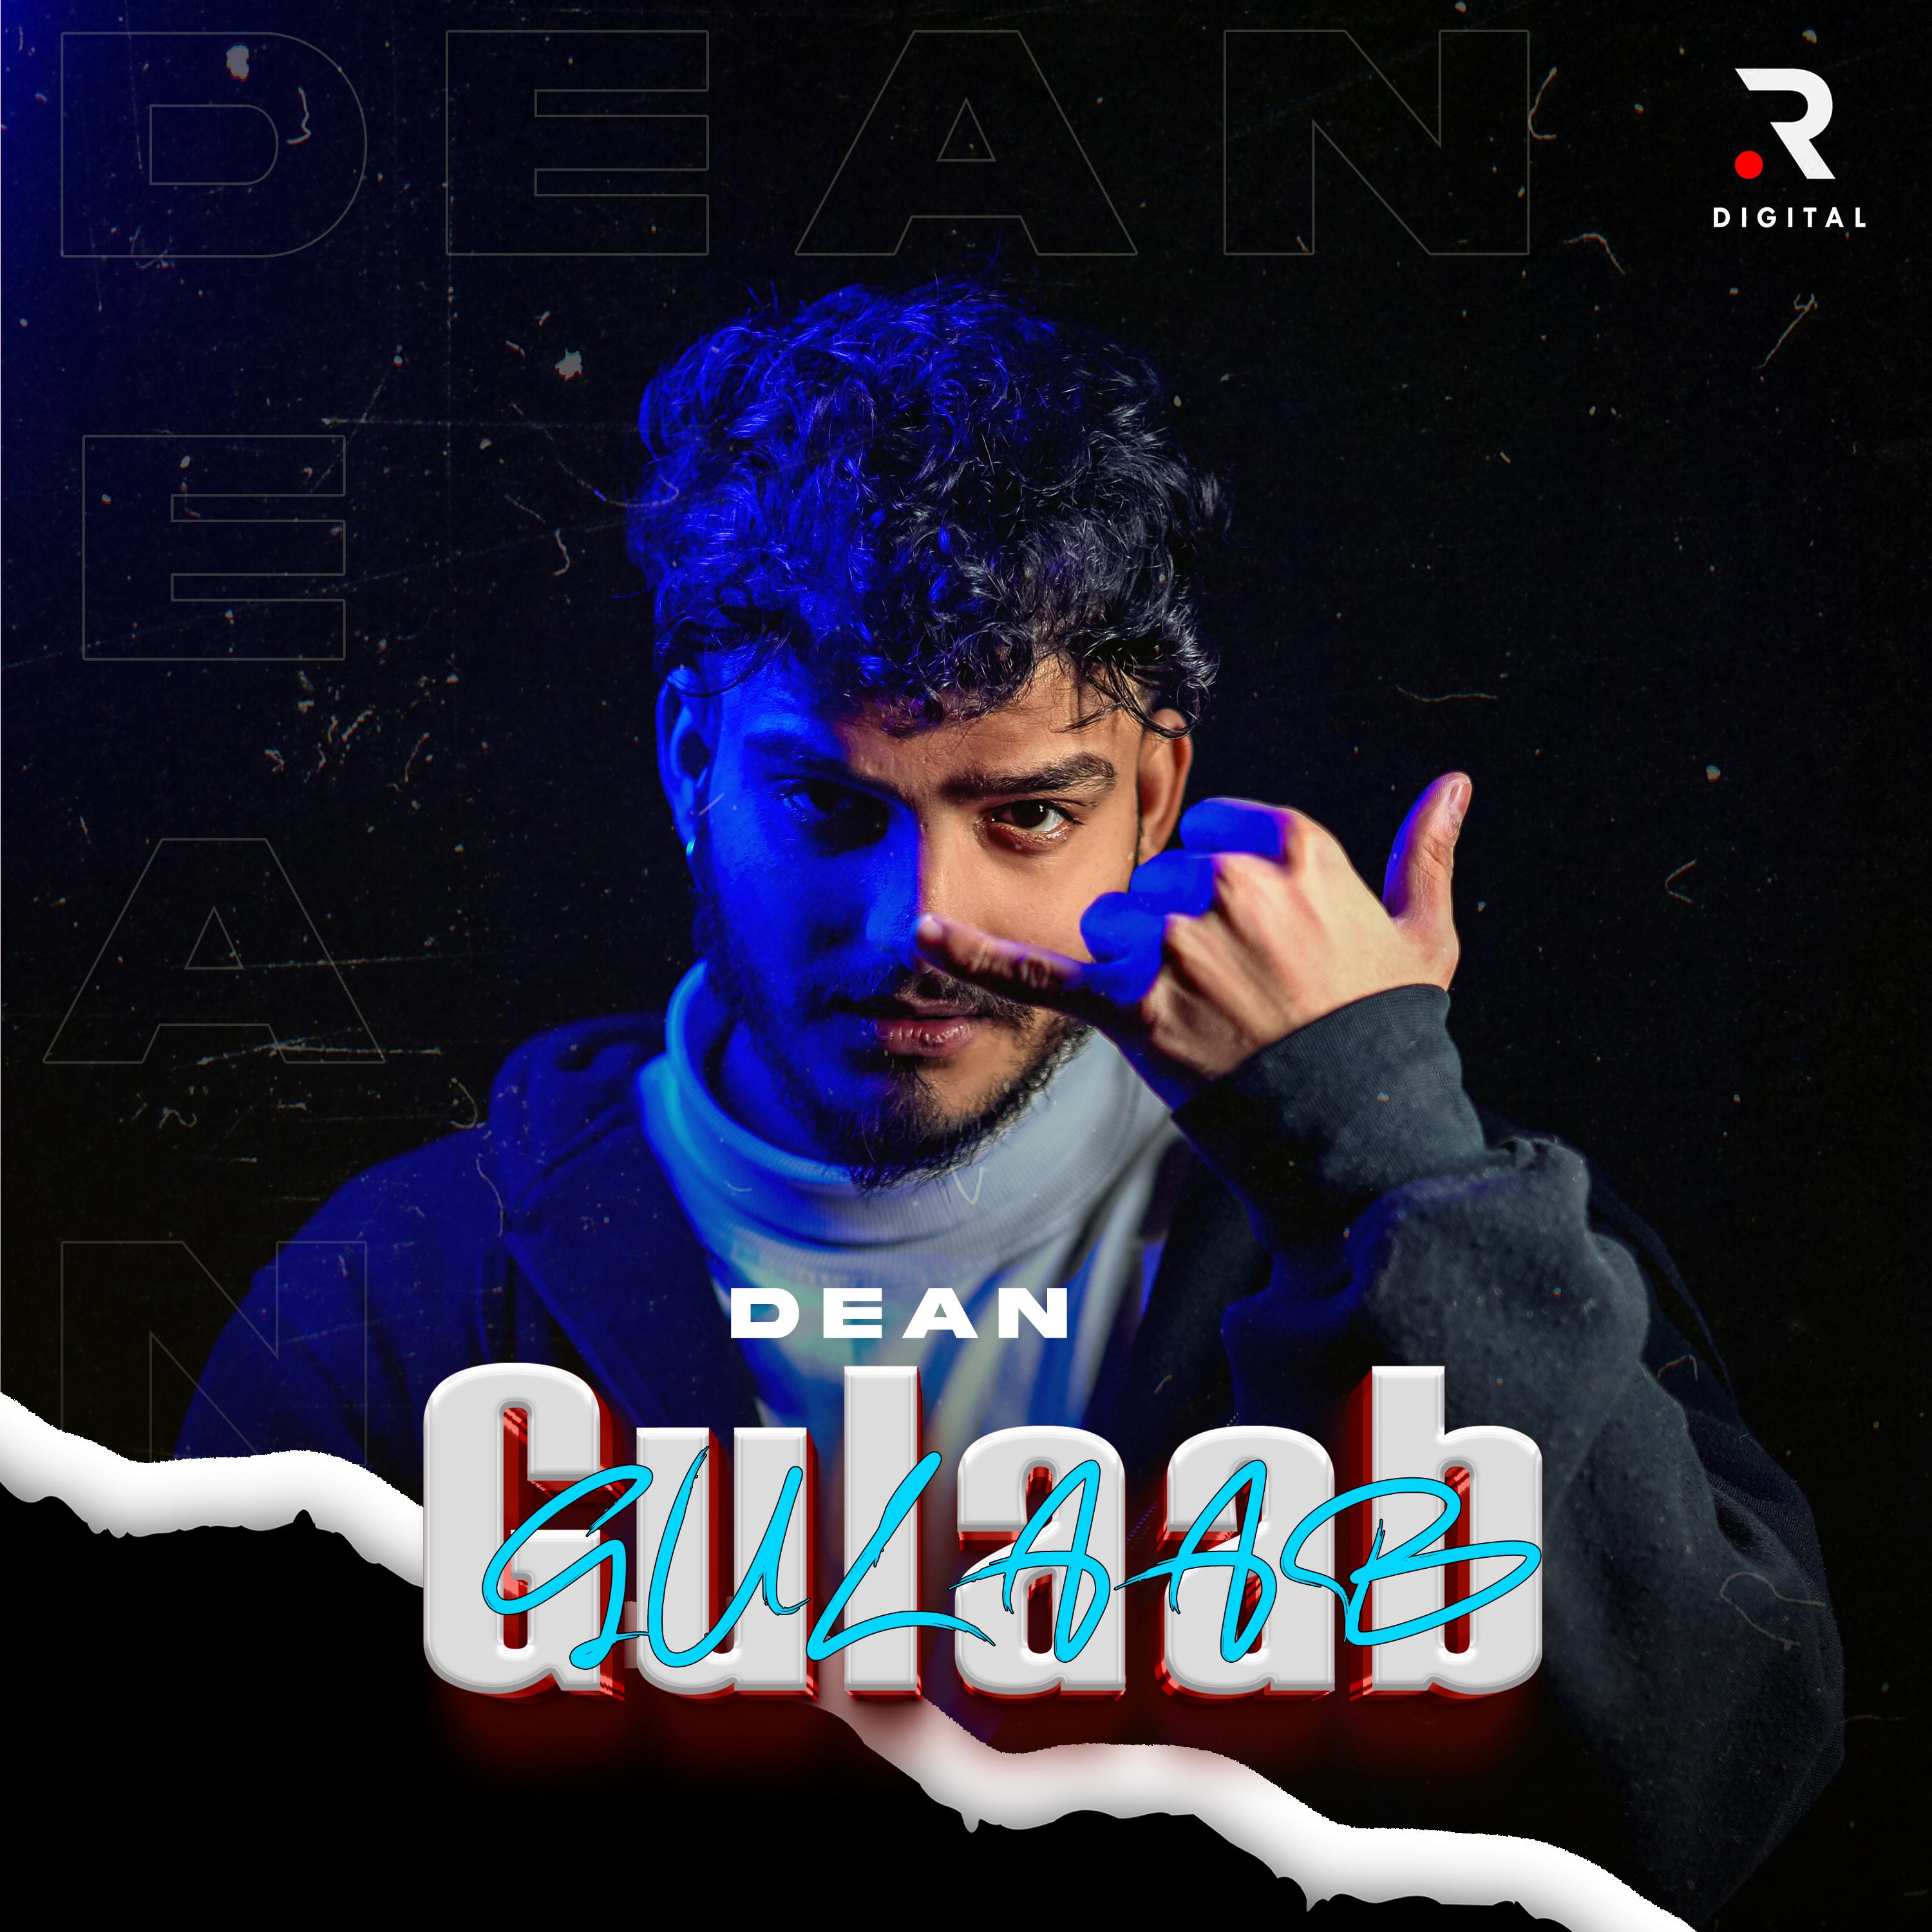 Постер альбома Gulaab